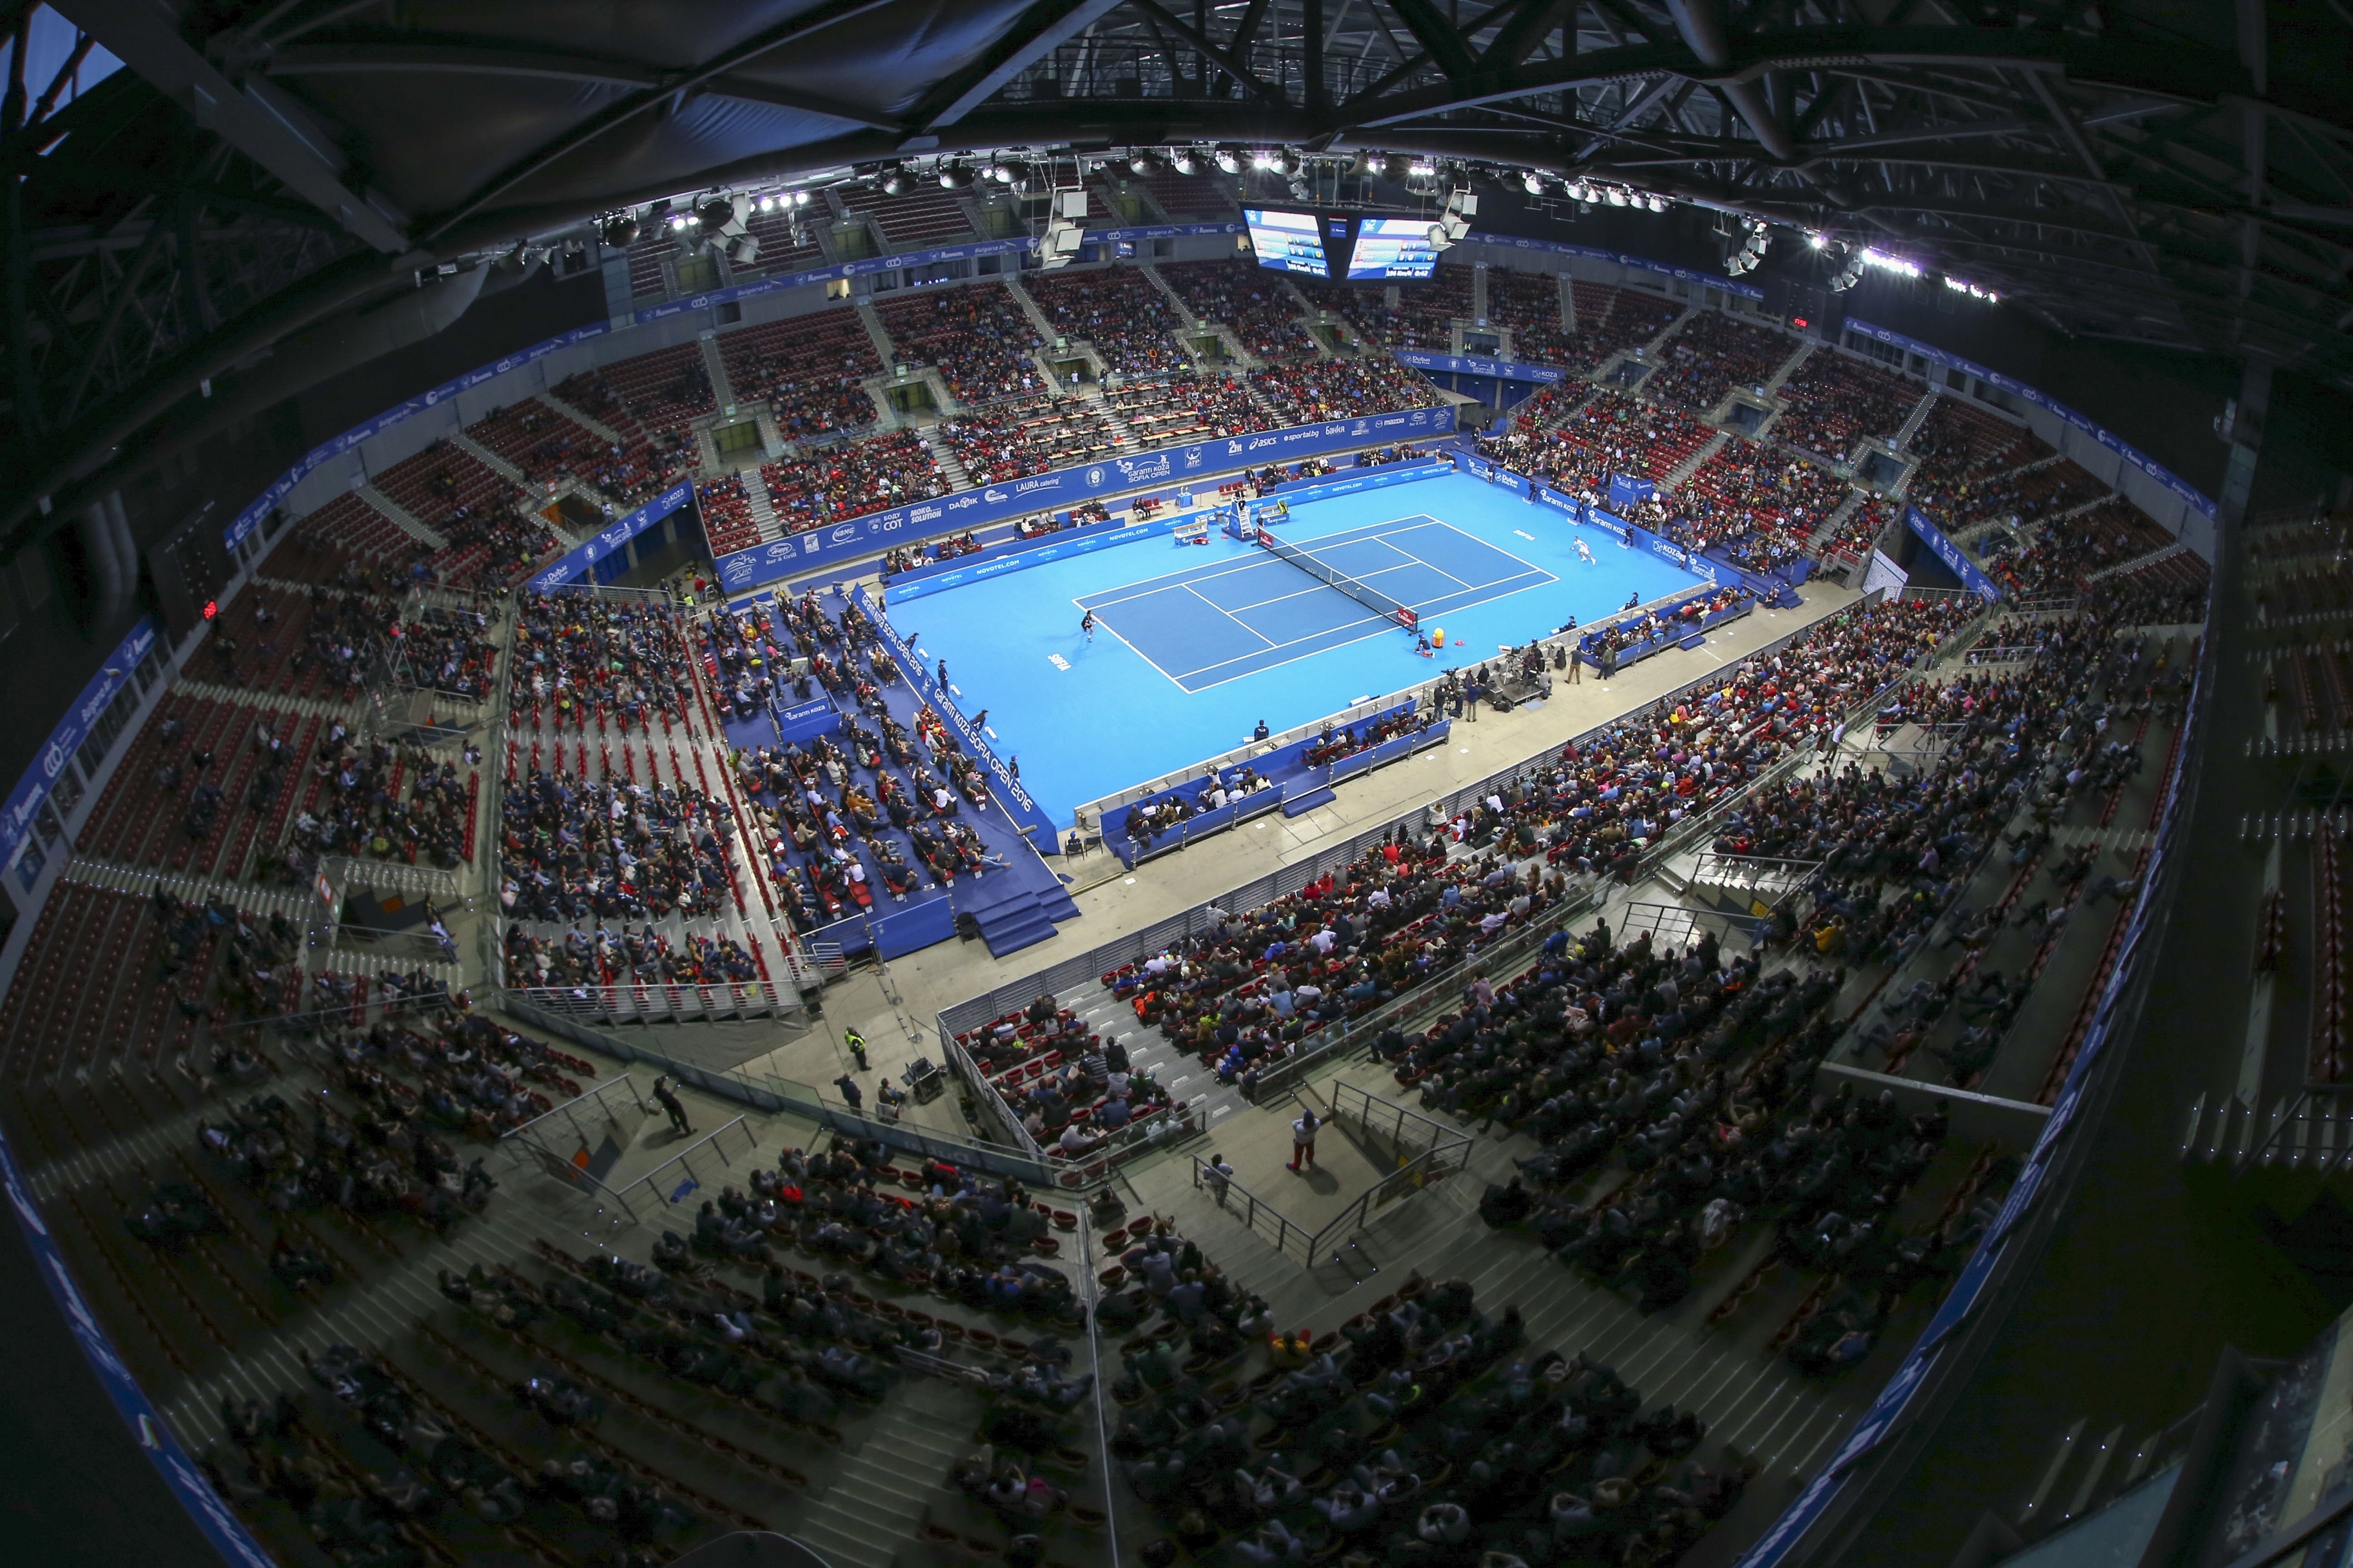 File:Garanti Koza Sofia Open - at Arena Armeets.jpg - Wikipedia